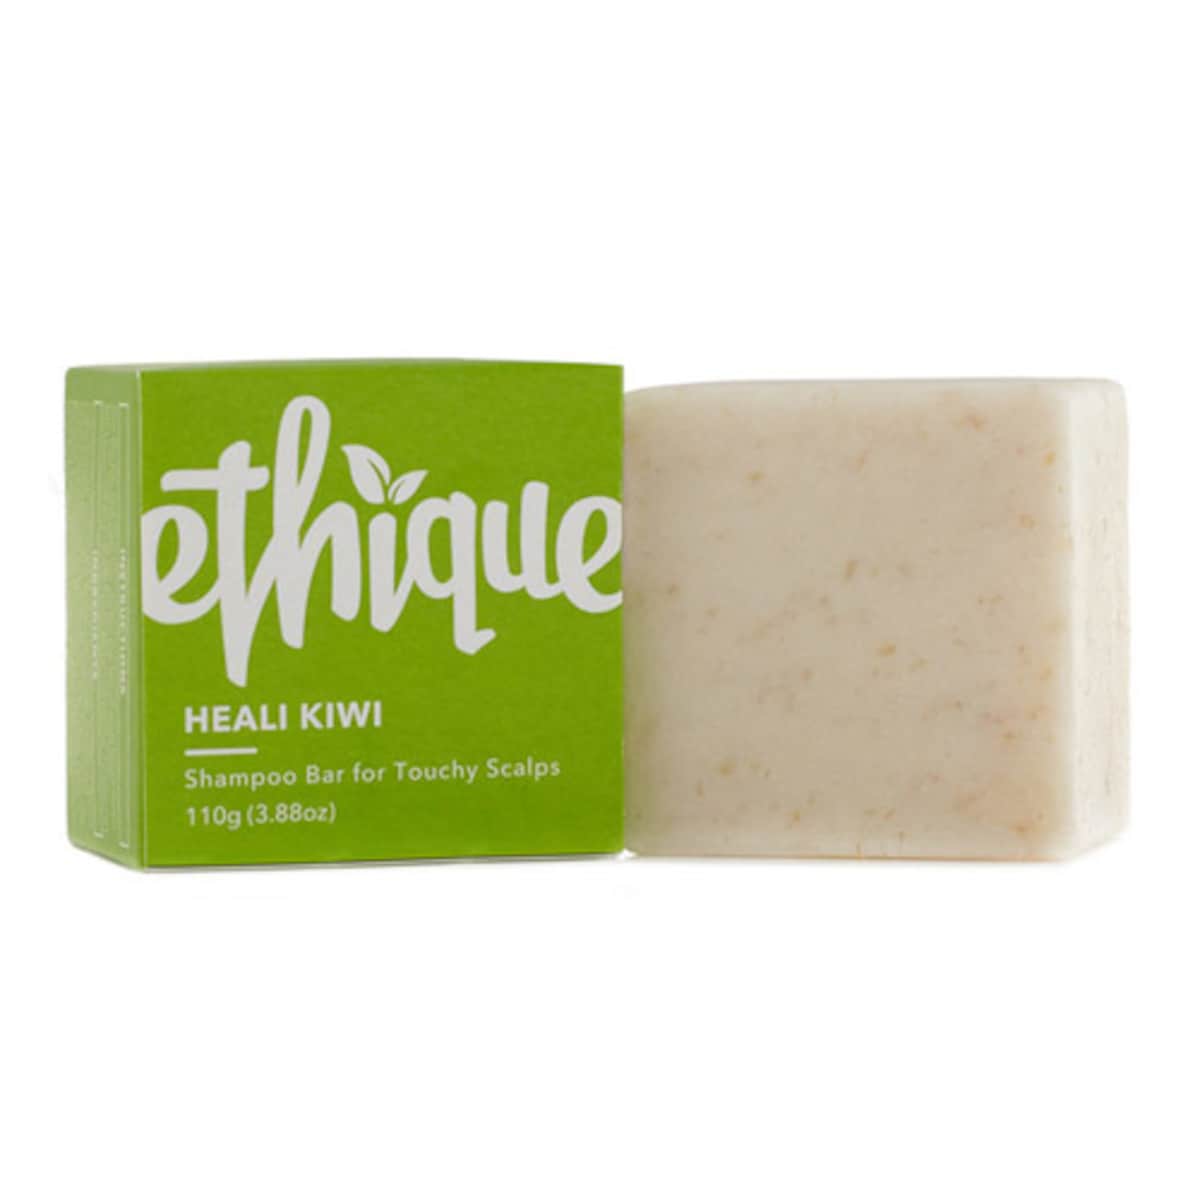 ETHIQUE Solid Shampoo Bar Heali Kiwi Touchy Scalps 110g